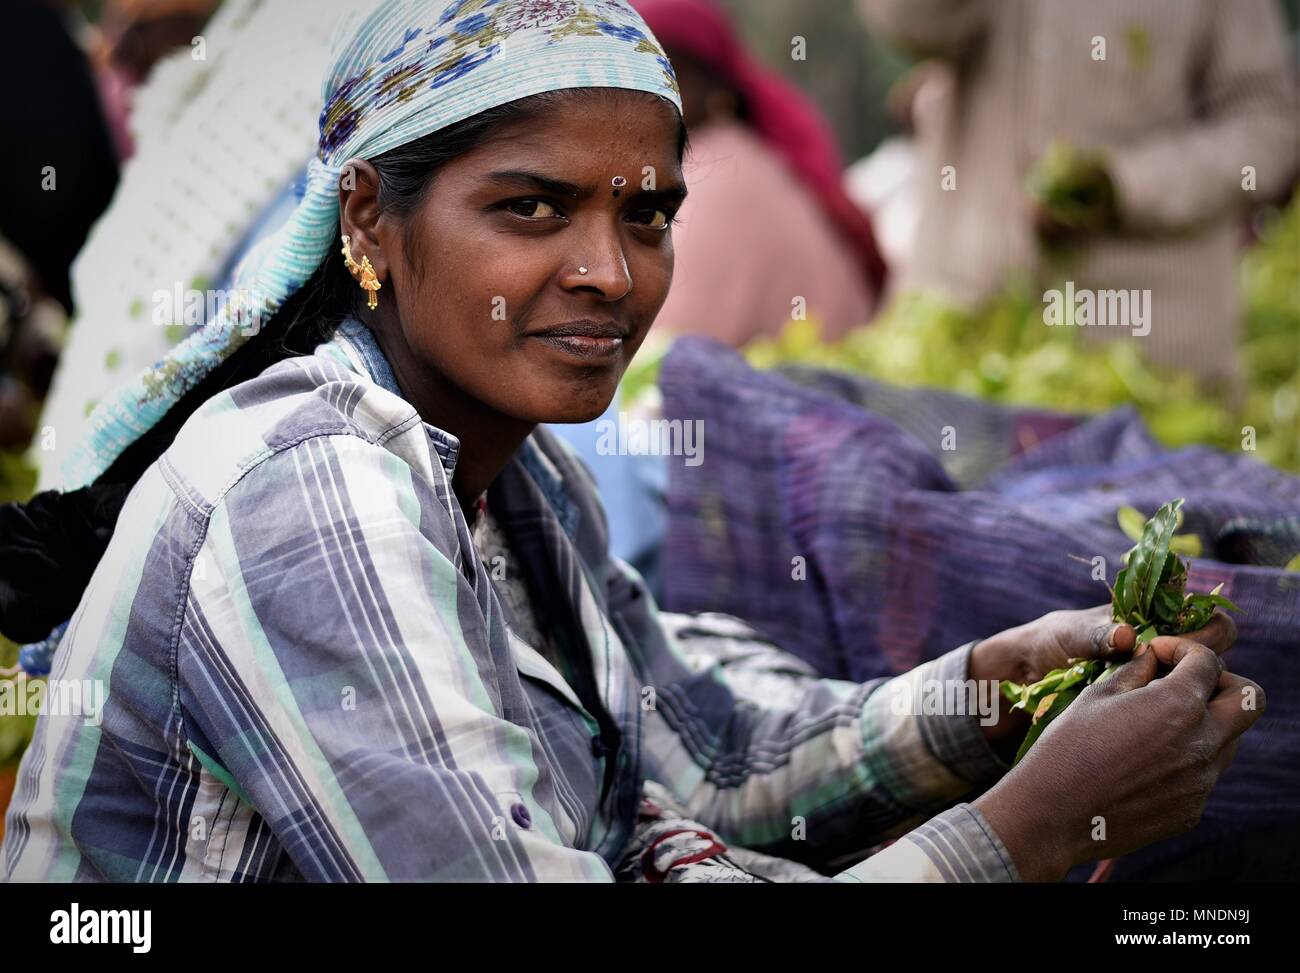 Kaffee picker bei der Arbeit, Coonoor, Nilgiri Berge, Tamil Nadu, Indien Foto © jacopo Emma/Sintesi/Alamy Stock Foto Stockfoto